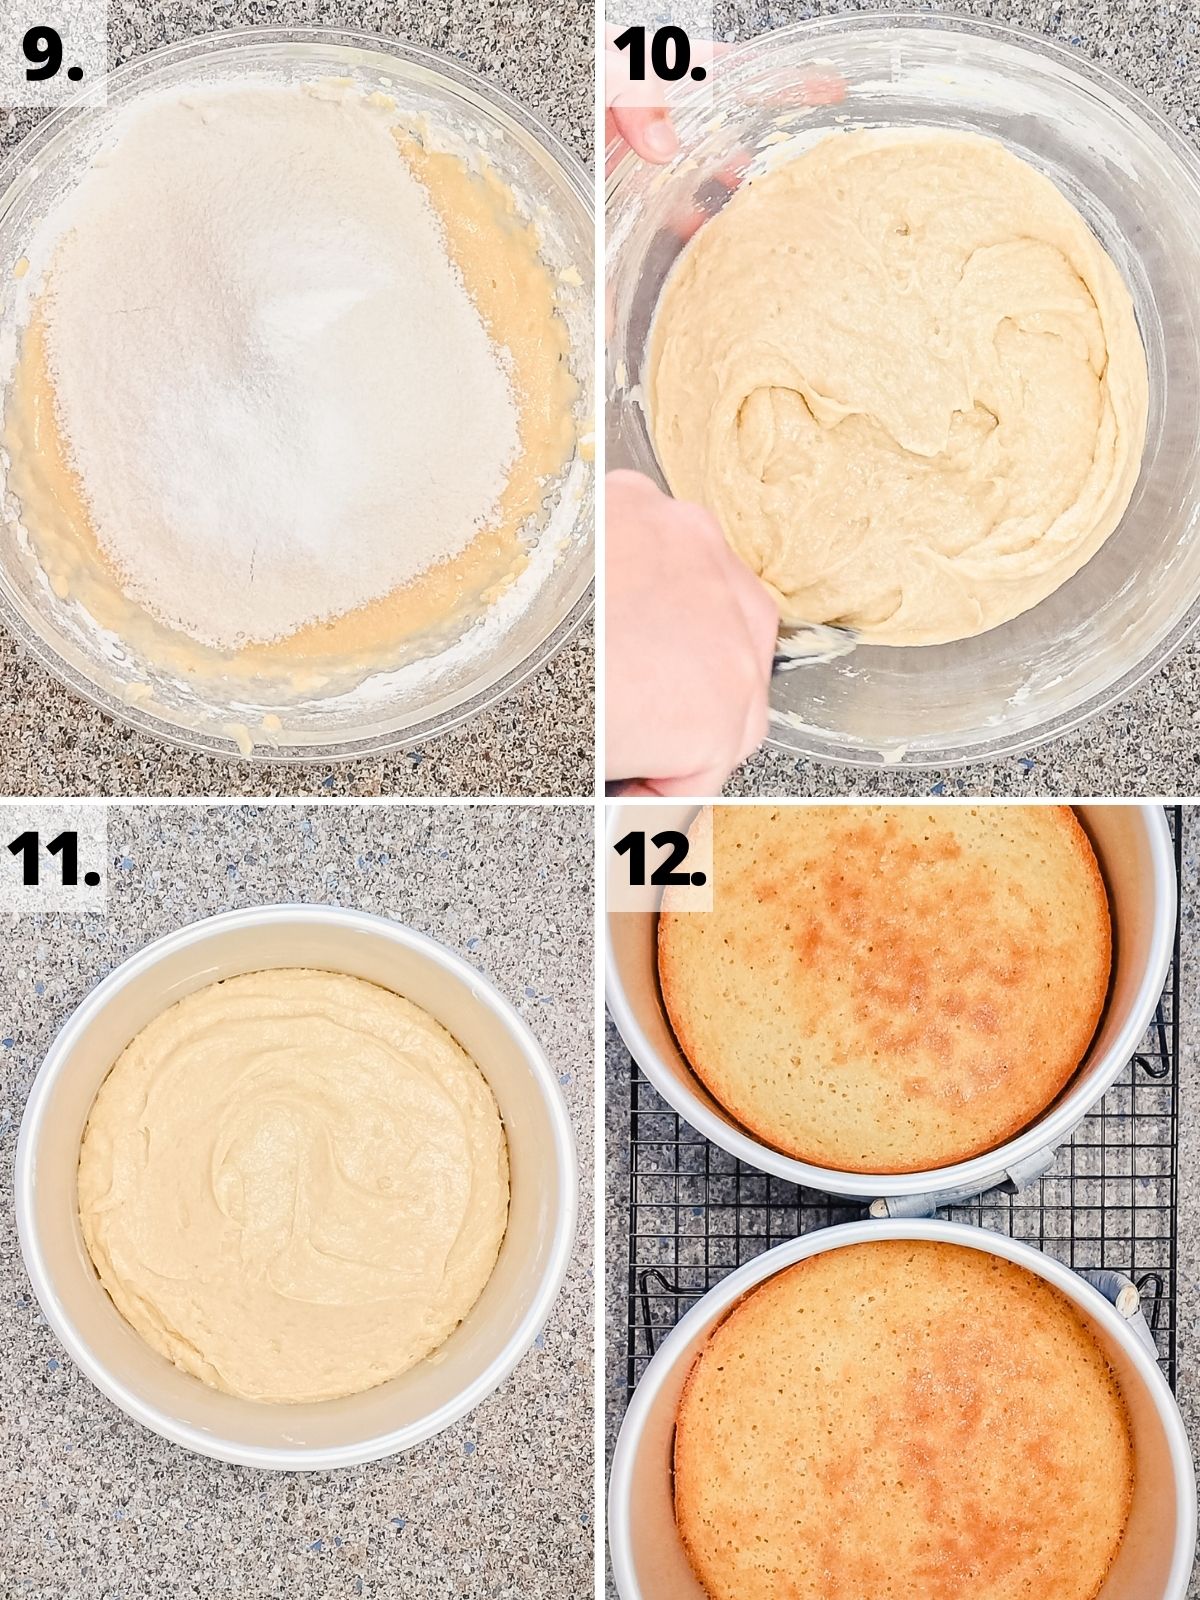 vanilla sponge cake recipe method steps 9 - 12